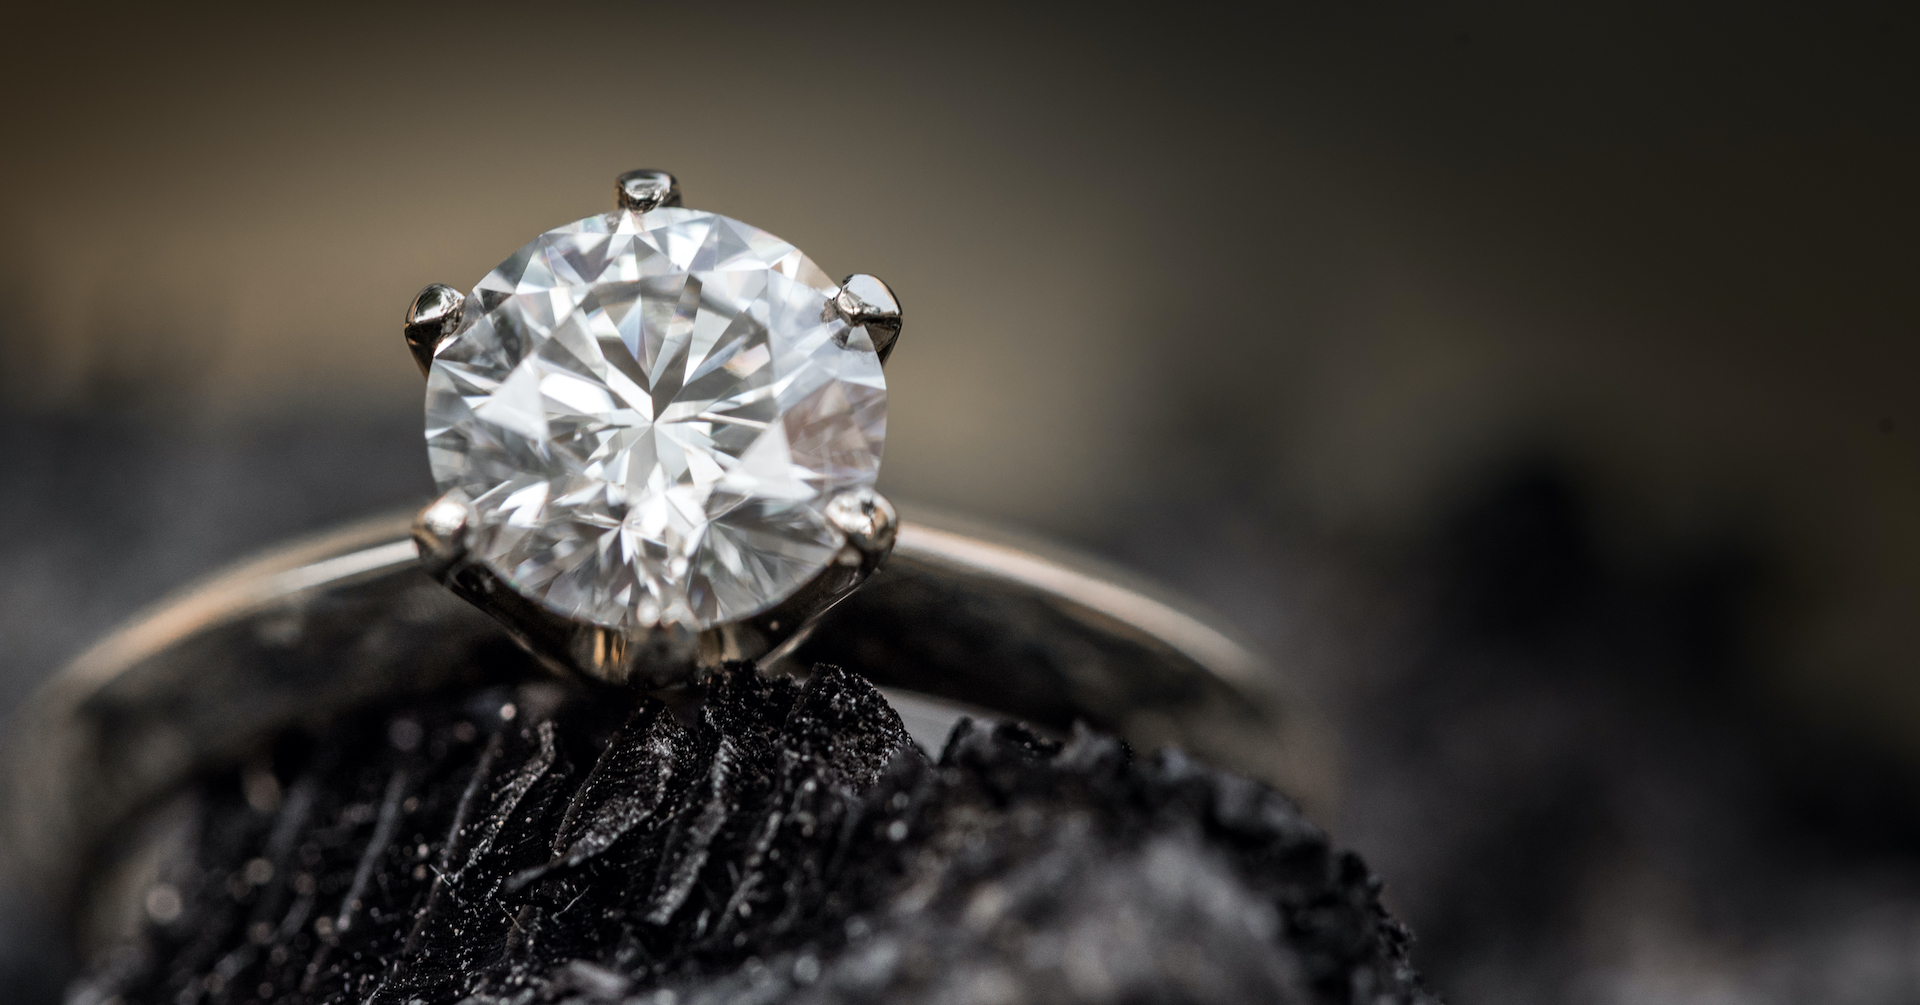 A Brief History of Diamond Jewellery